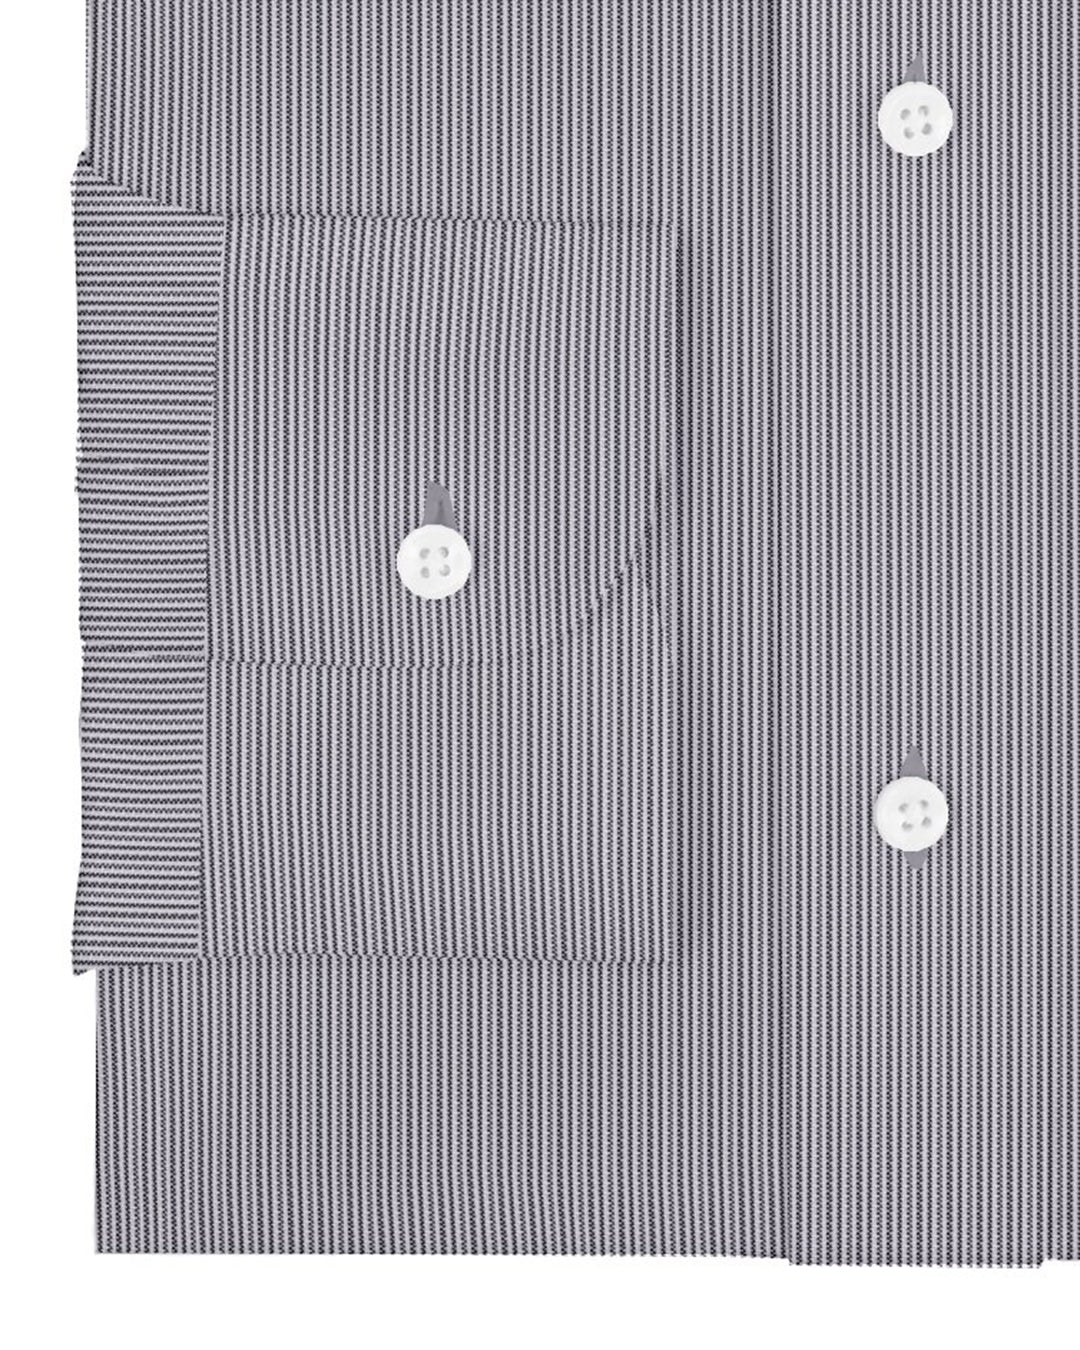 Linen: Black White Dress Stripes